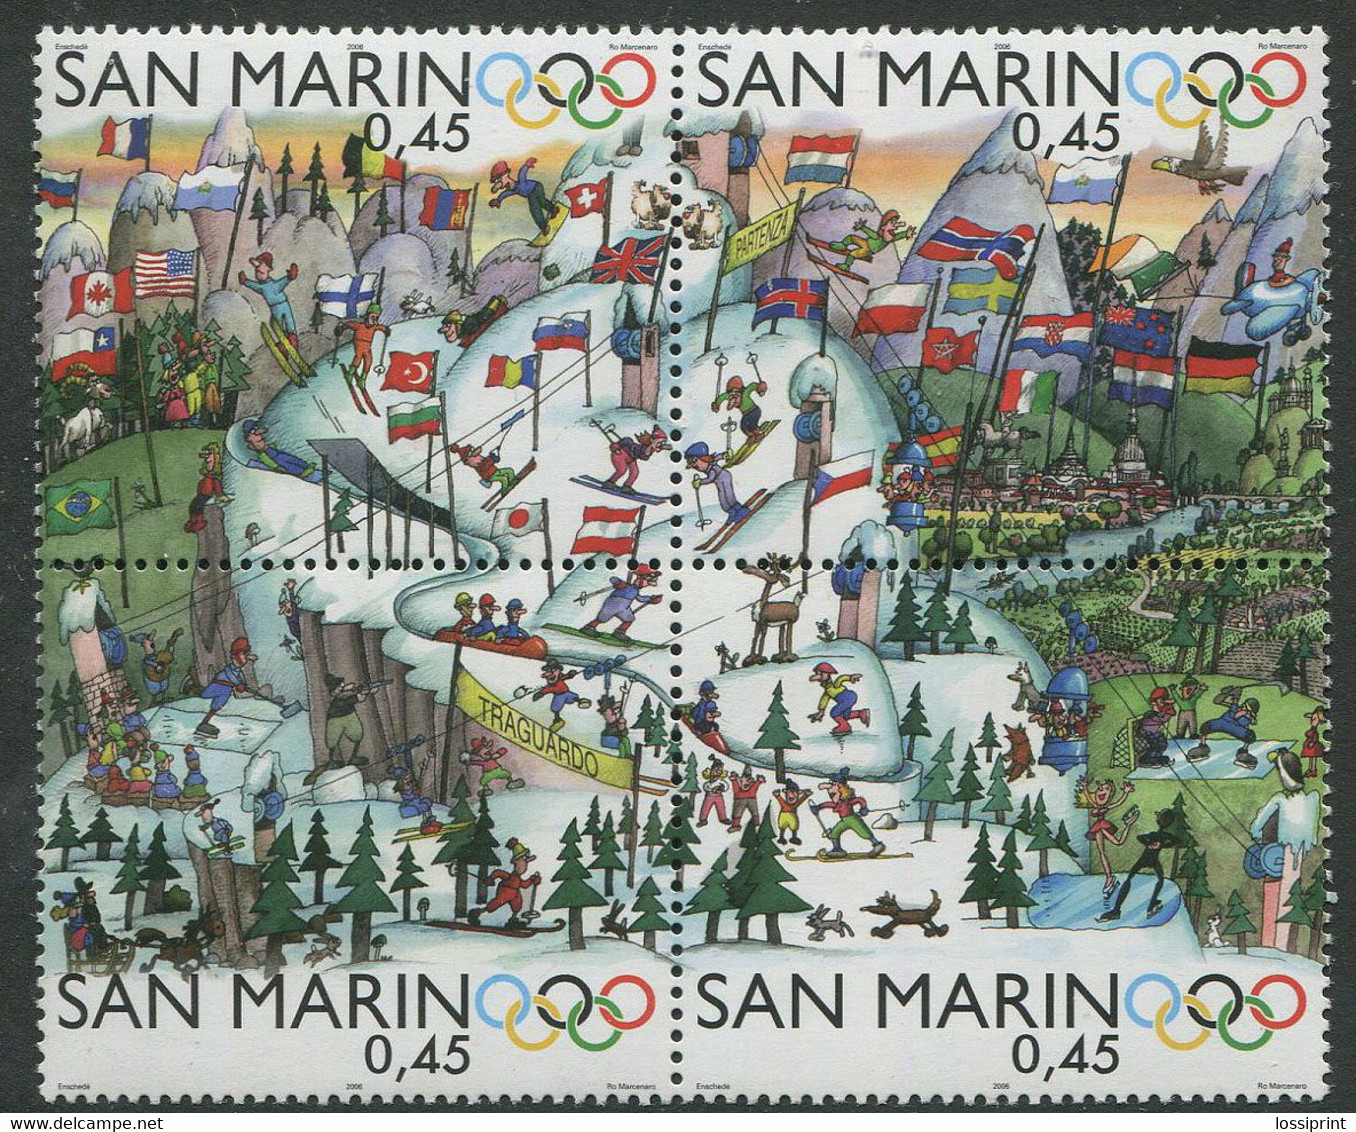 San Marino:Unused Stamps Serie Torino Olympic Games 2006, MNH - Winter 2006: Turin